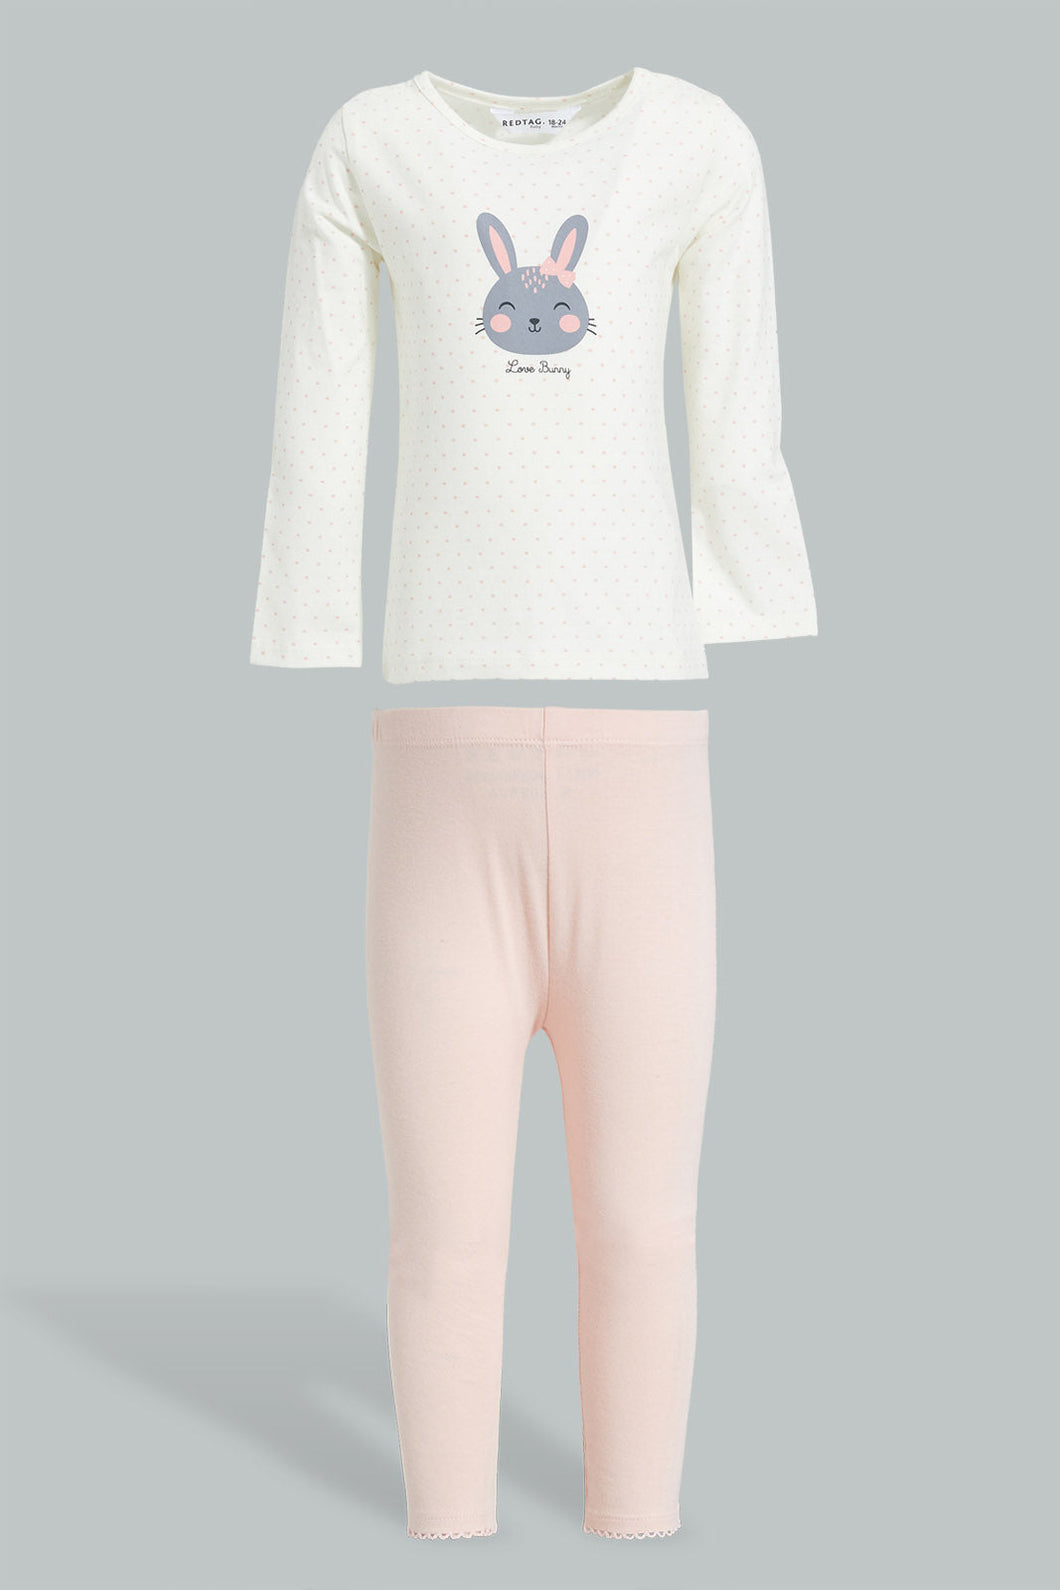 Whit Bunny T-Shirt With Pink Legging Set (2 Piece) طقم كاجوال بطبعة أرنب باللون الأبيض والوردي (قطعتين)